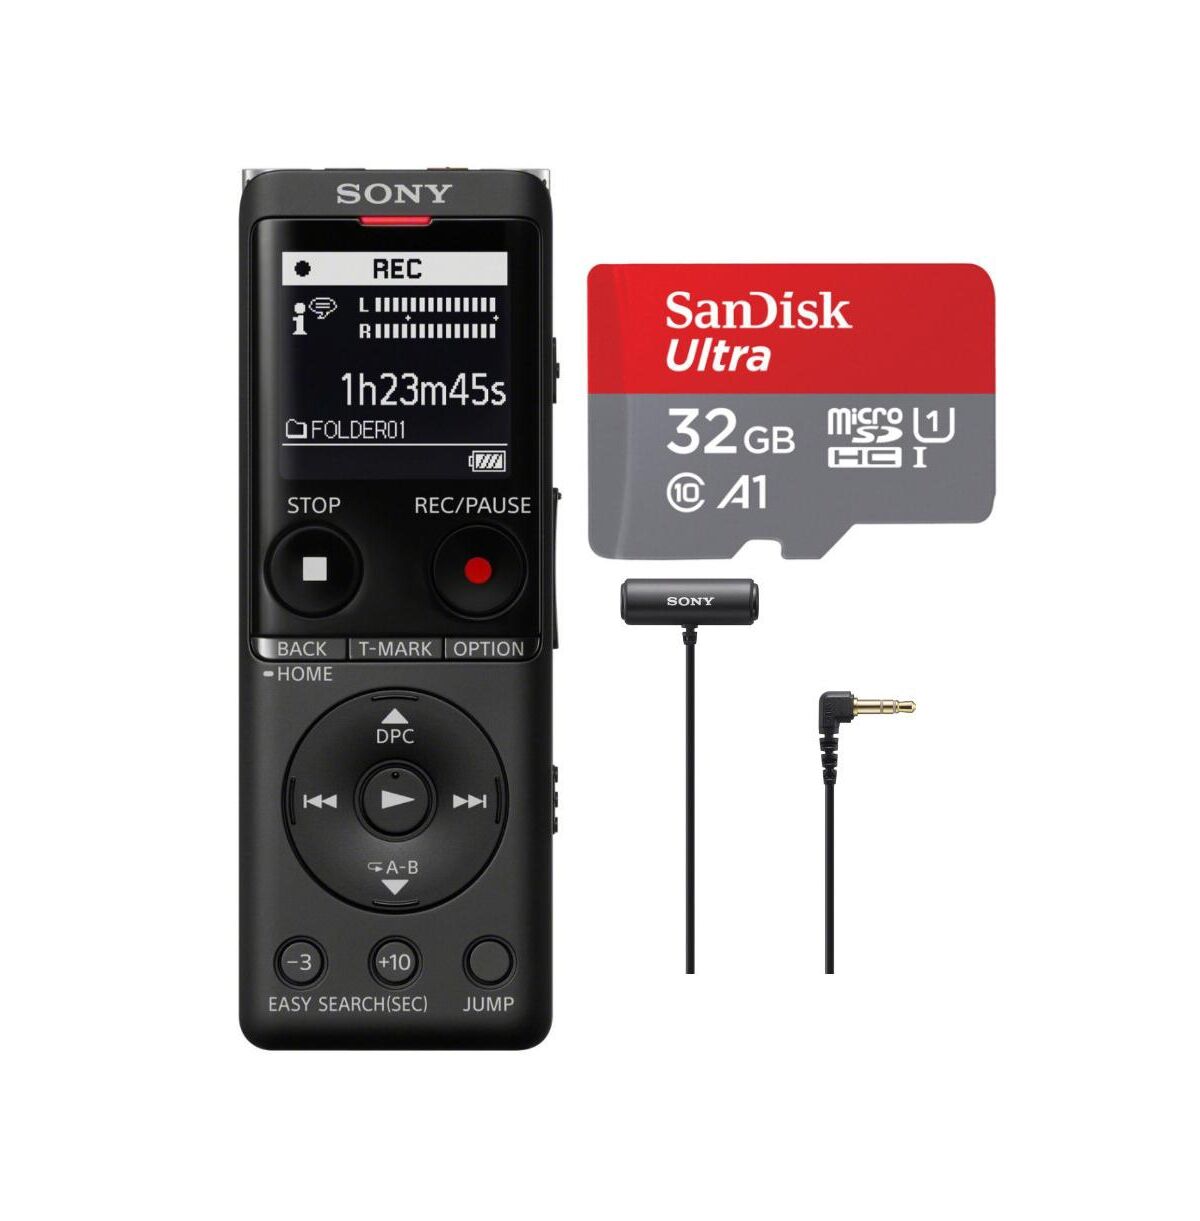 Sony Icd-UX570 Series UX570 Digital Voice Recorder (Black) with 32GB Card Bundle - Black